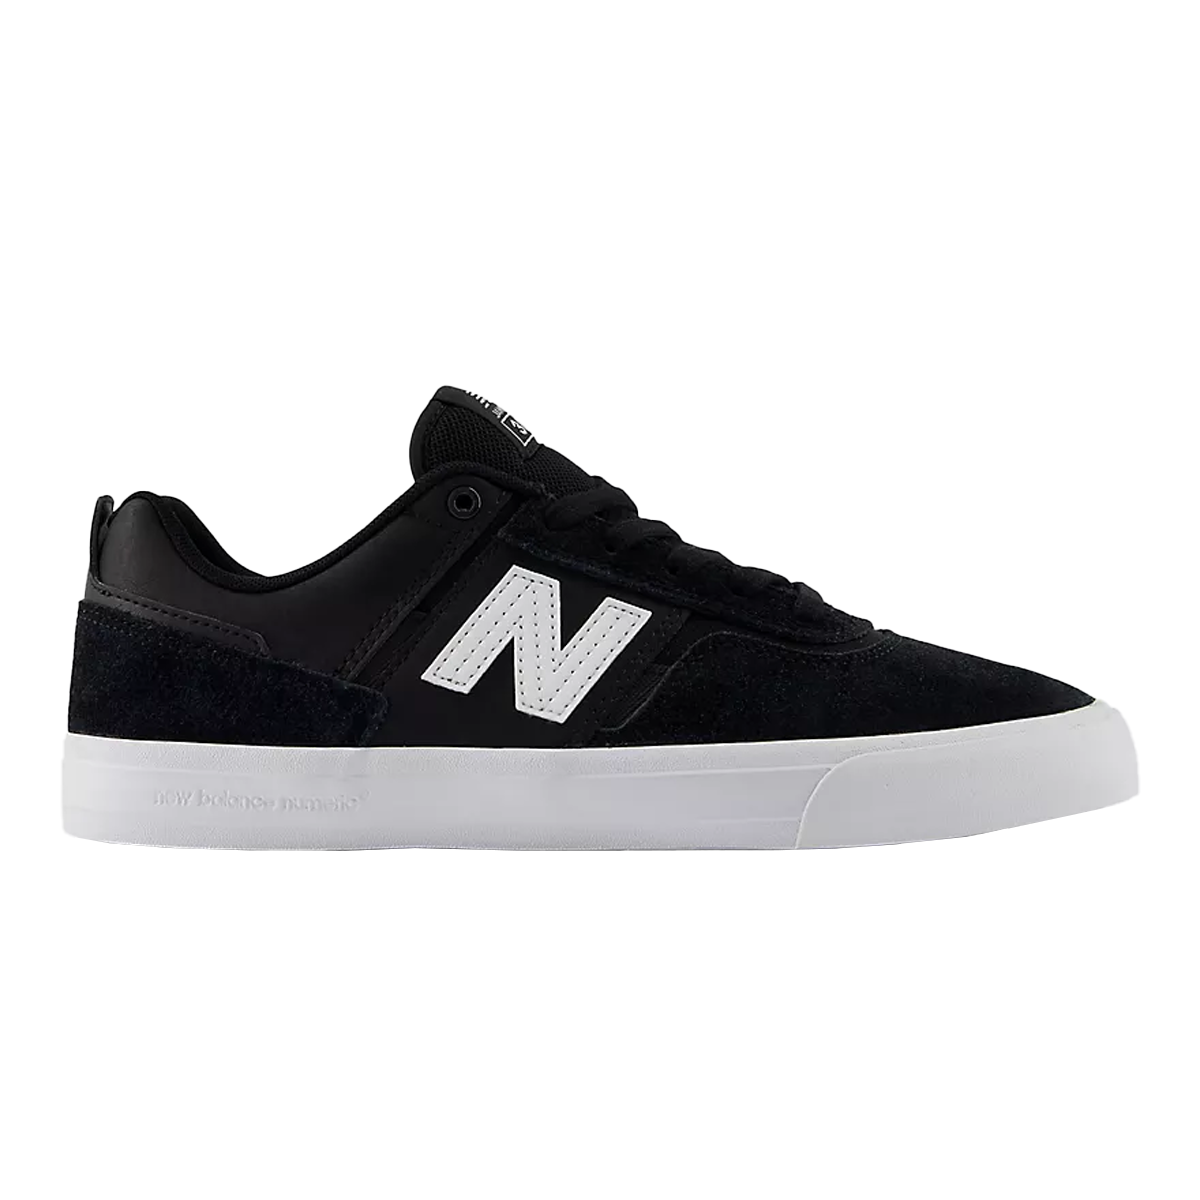 New Balance NM 306 Shoes - Black / White